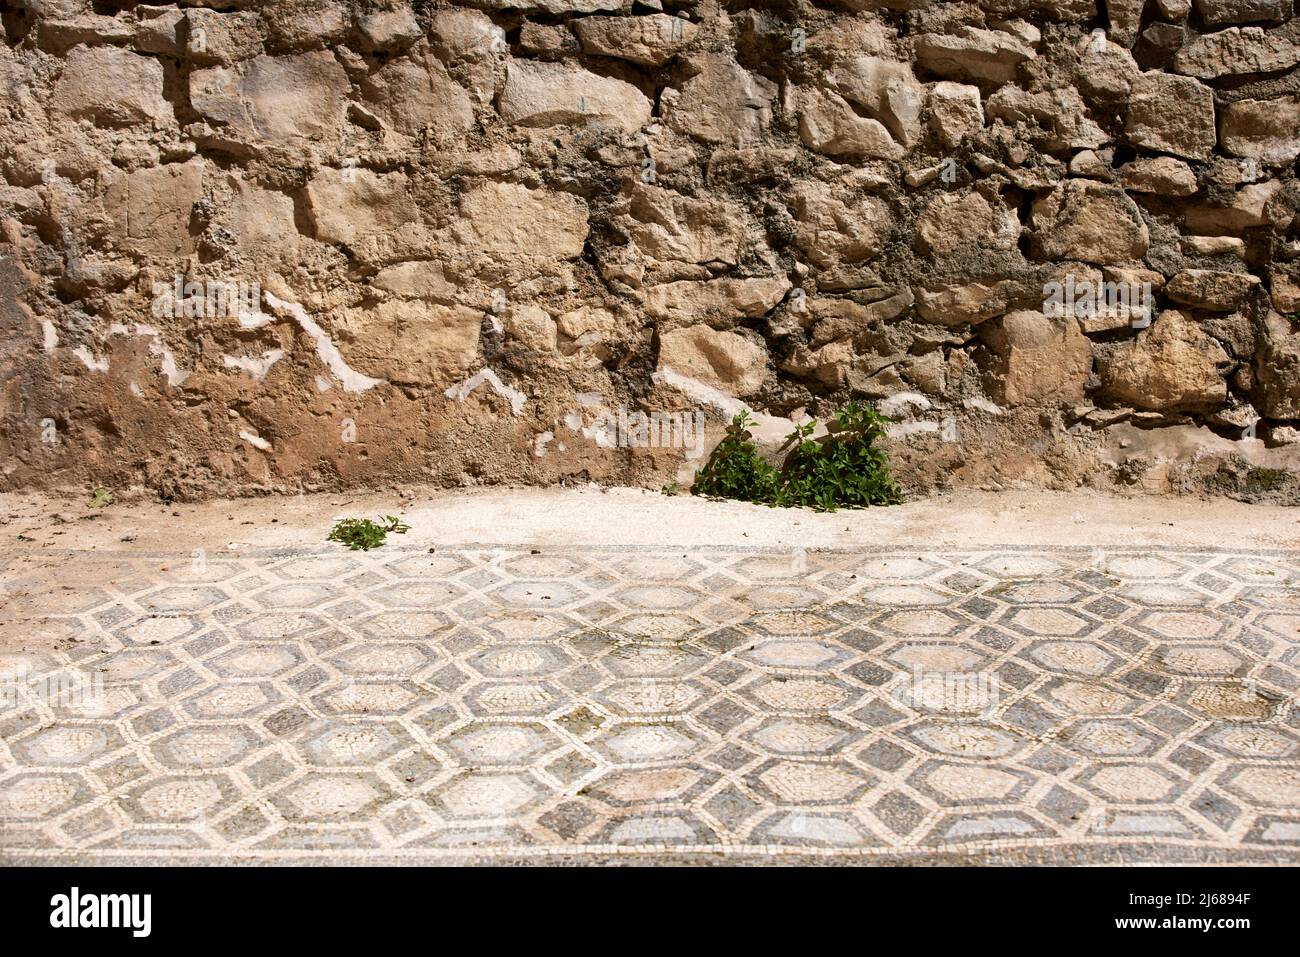 The city of Split in Croatia in the region of Dalmatia Roman-era mosaic tile floor of Diocletian's Palace Stock Photo